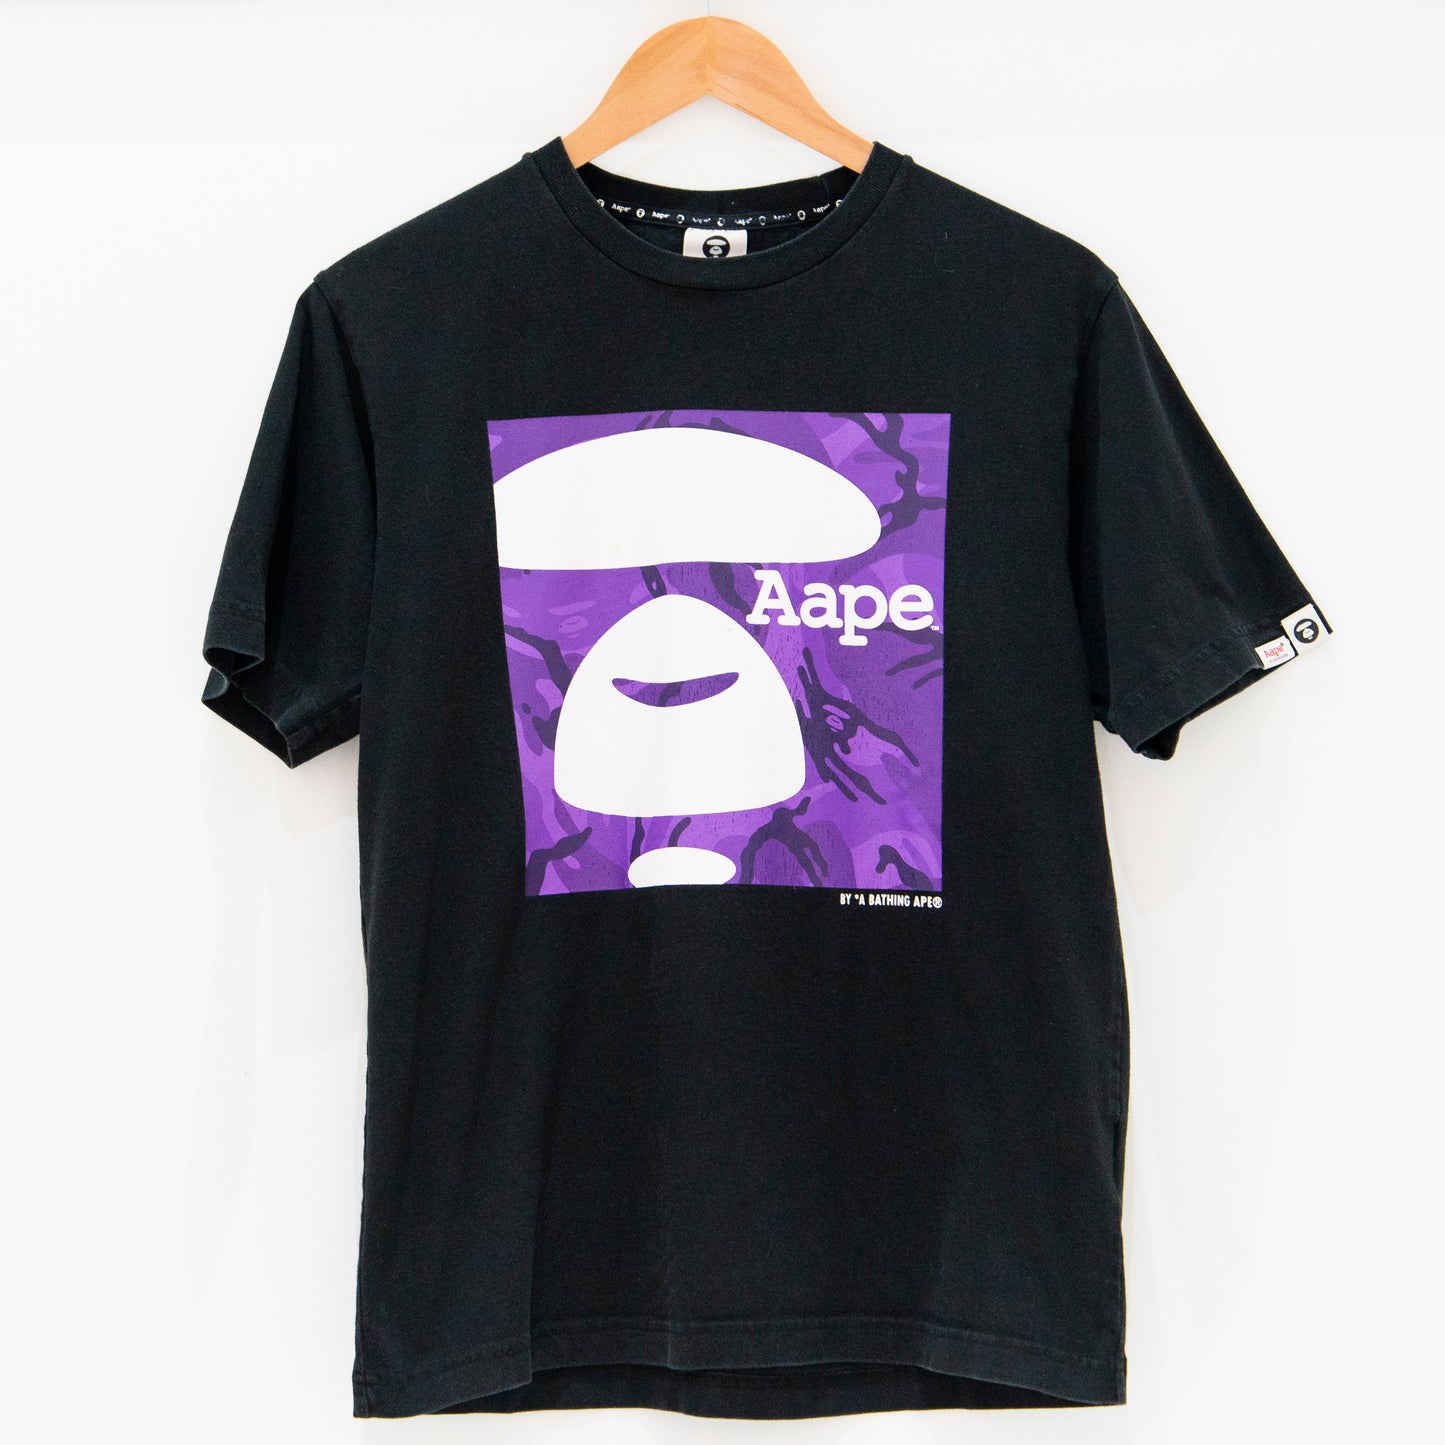 Aape by Bathing Ape T-Shirt Medium